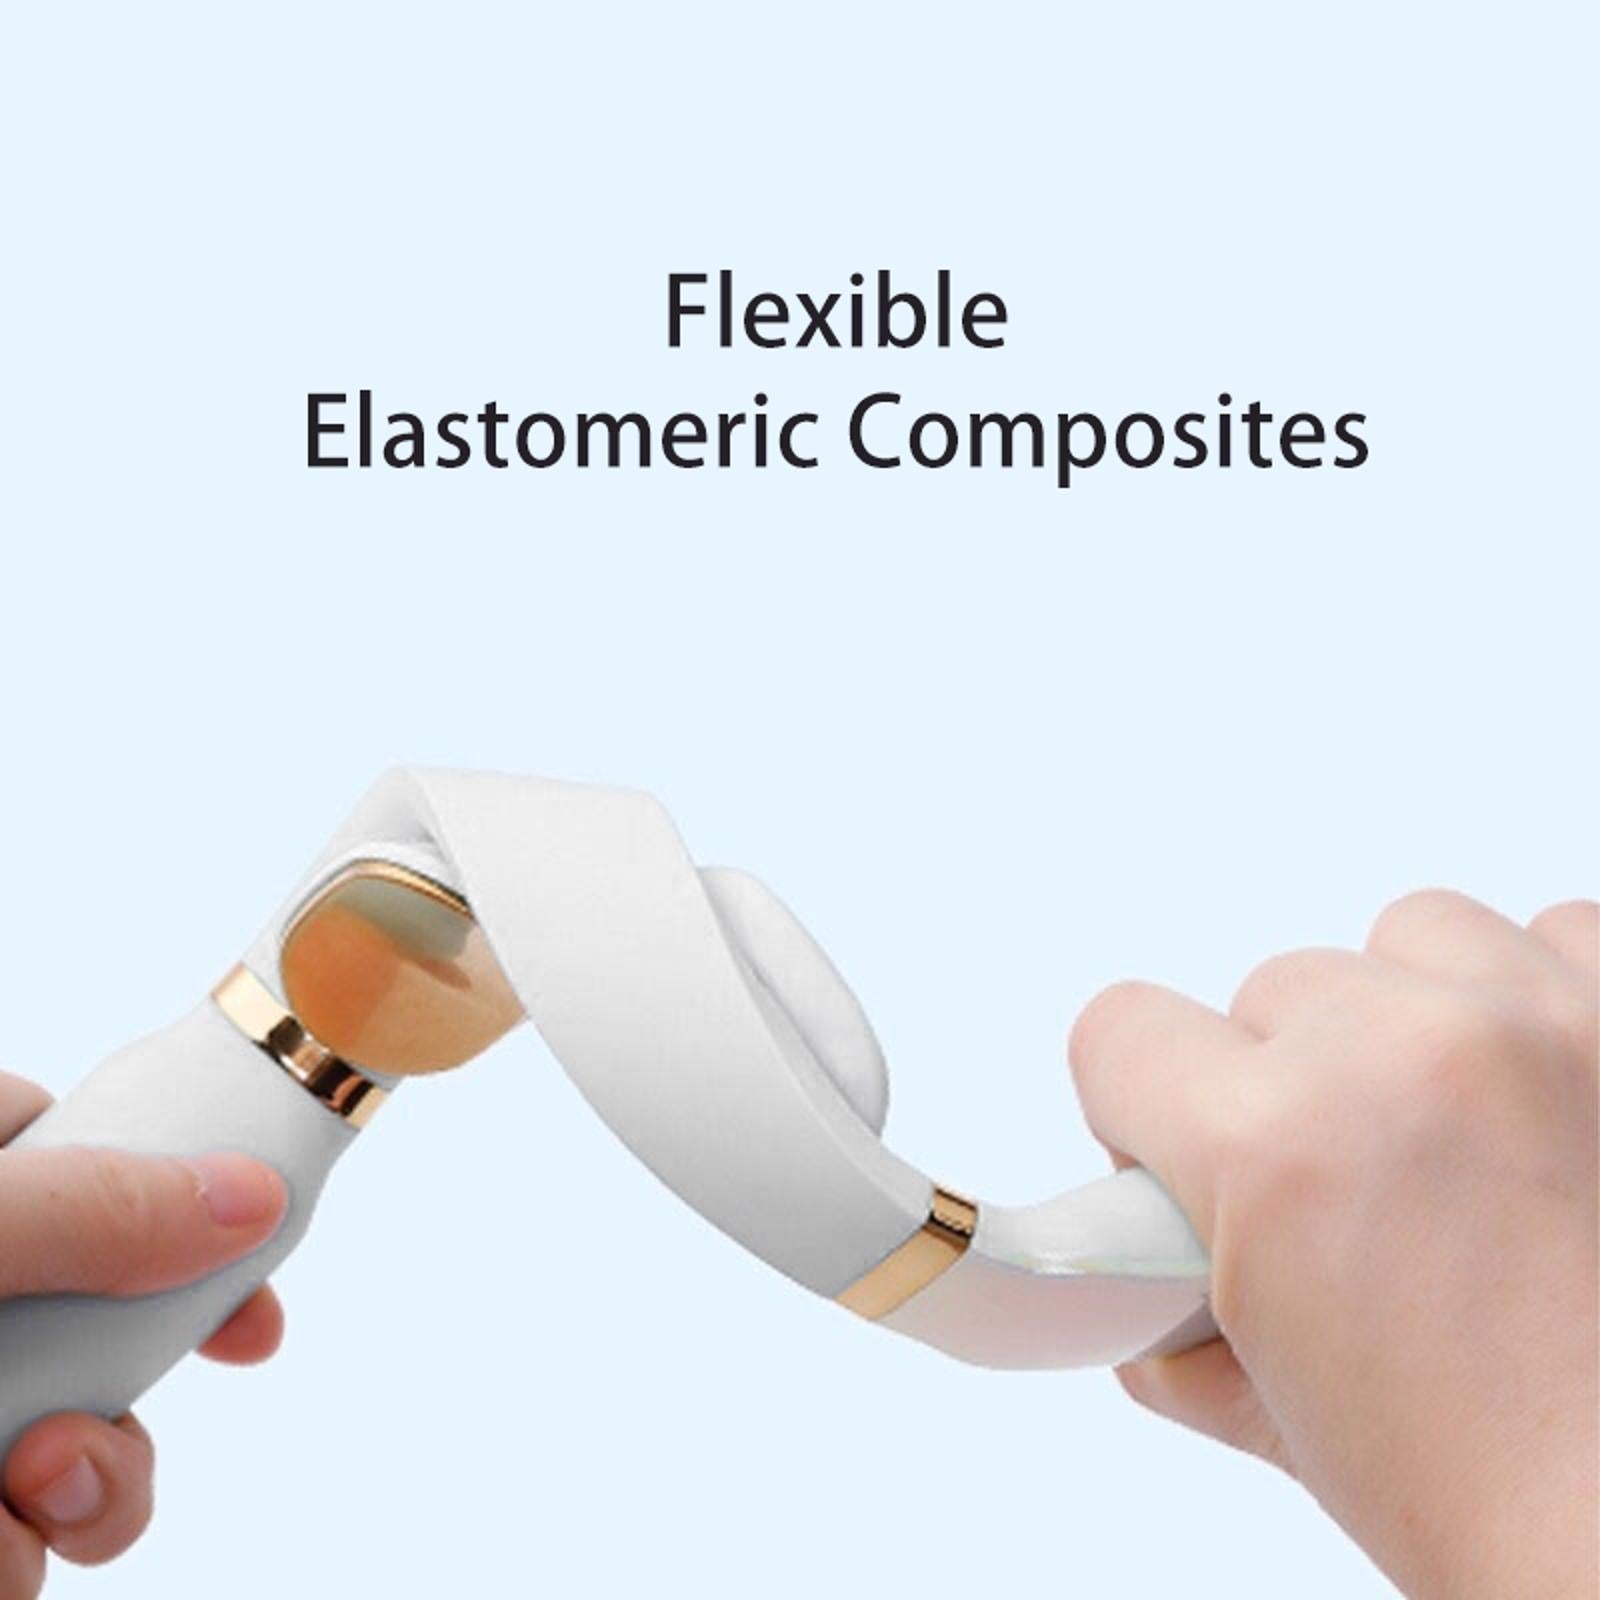 Flexible Elastomeric Composites